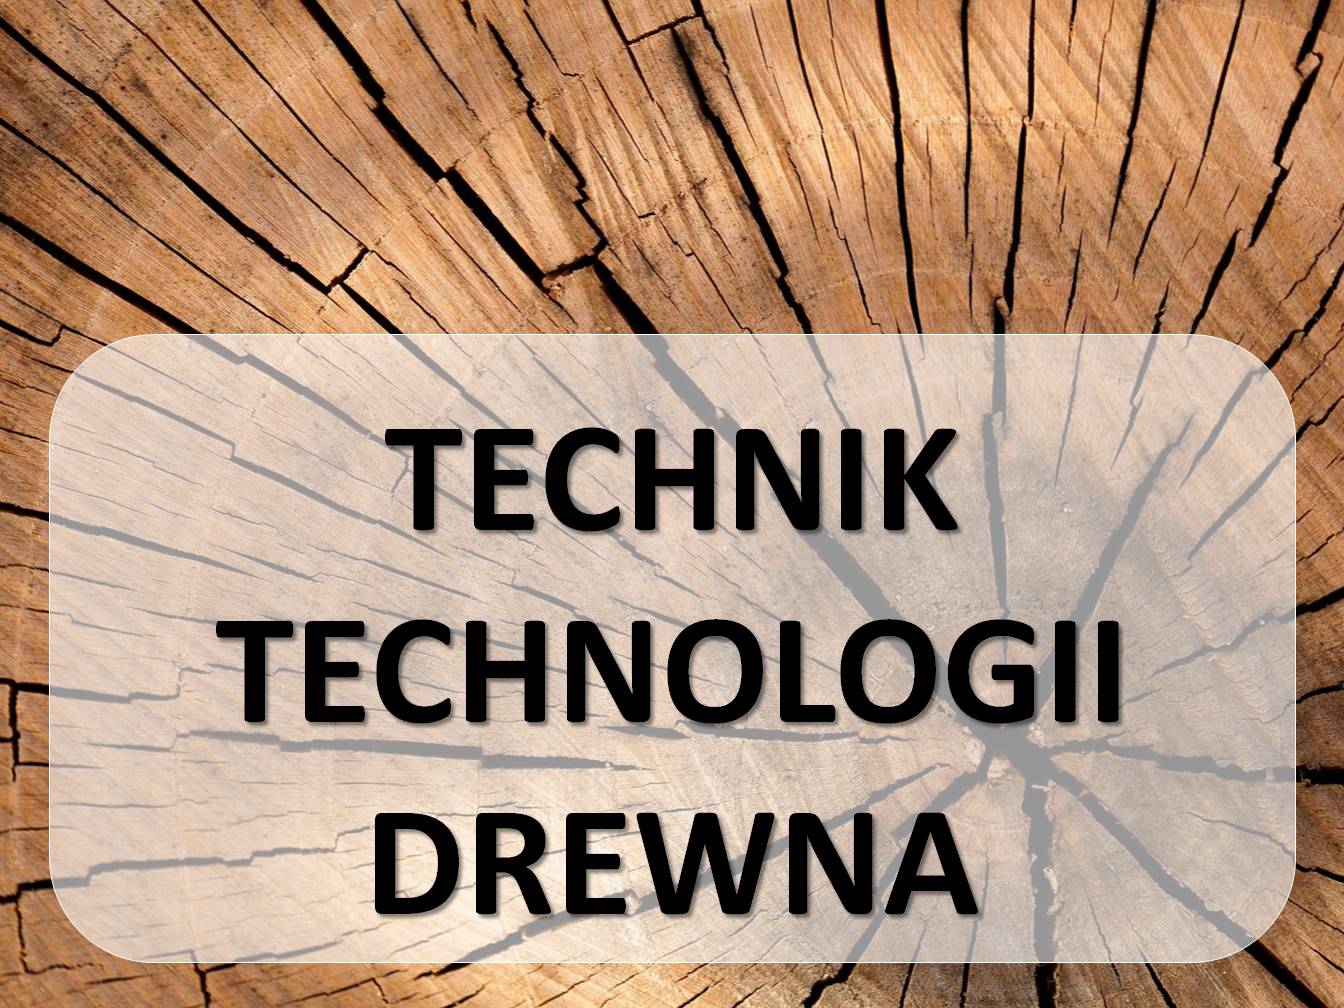 Technik technologii drewna